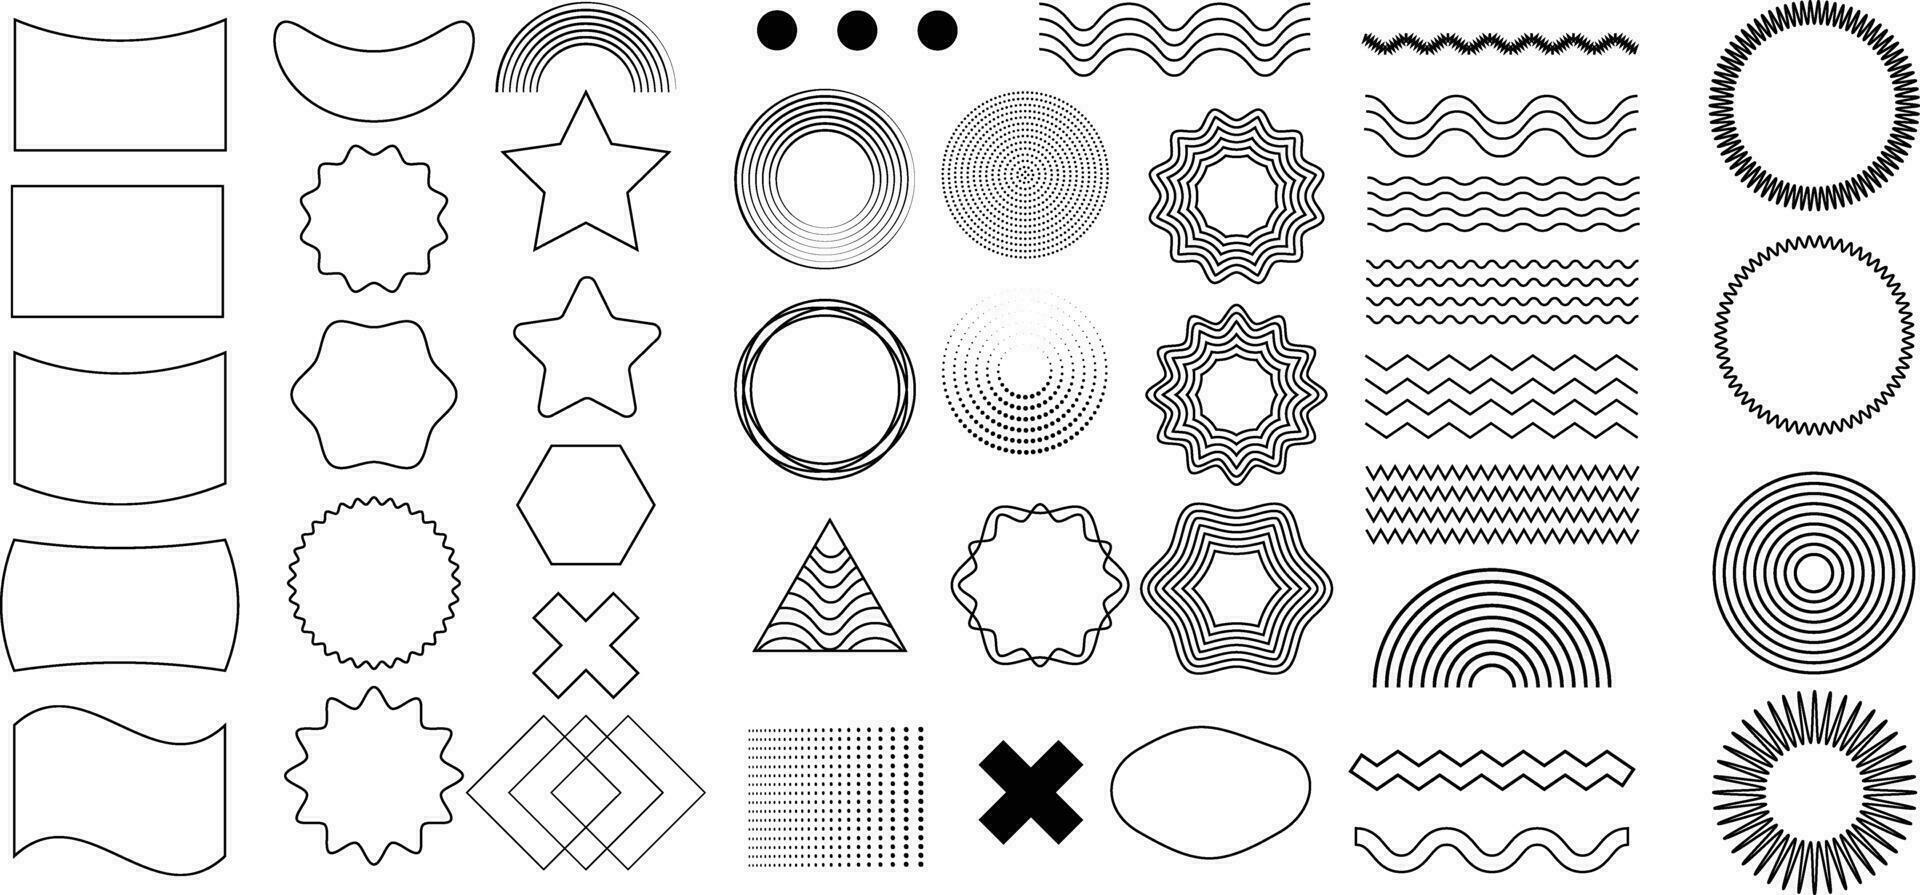 set of Vector geometric design elements, background designs, element for web, vintage, commercial, advertisement, t-shirt design